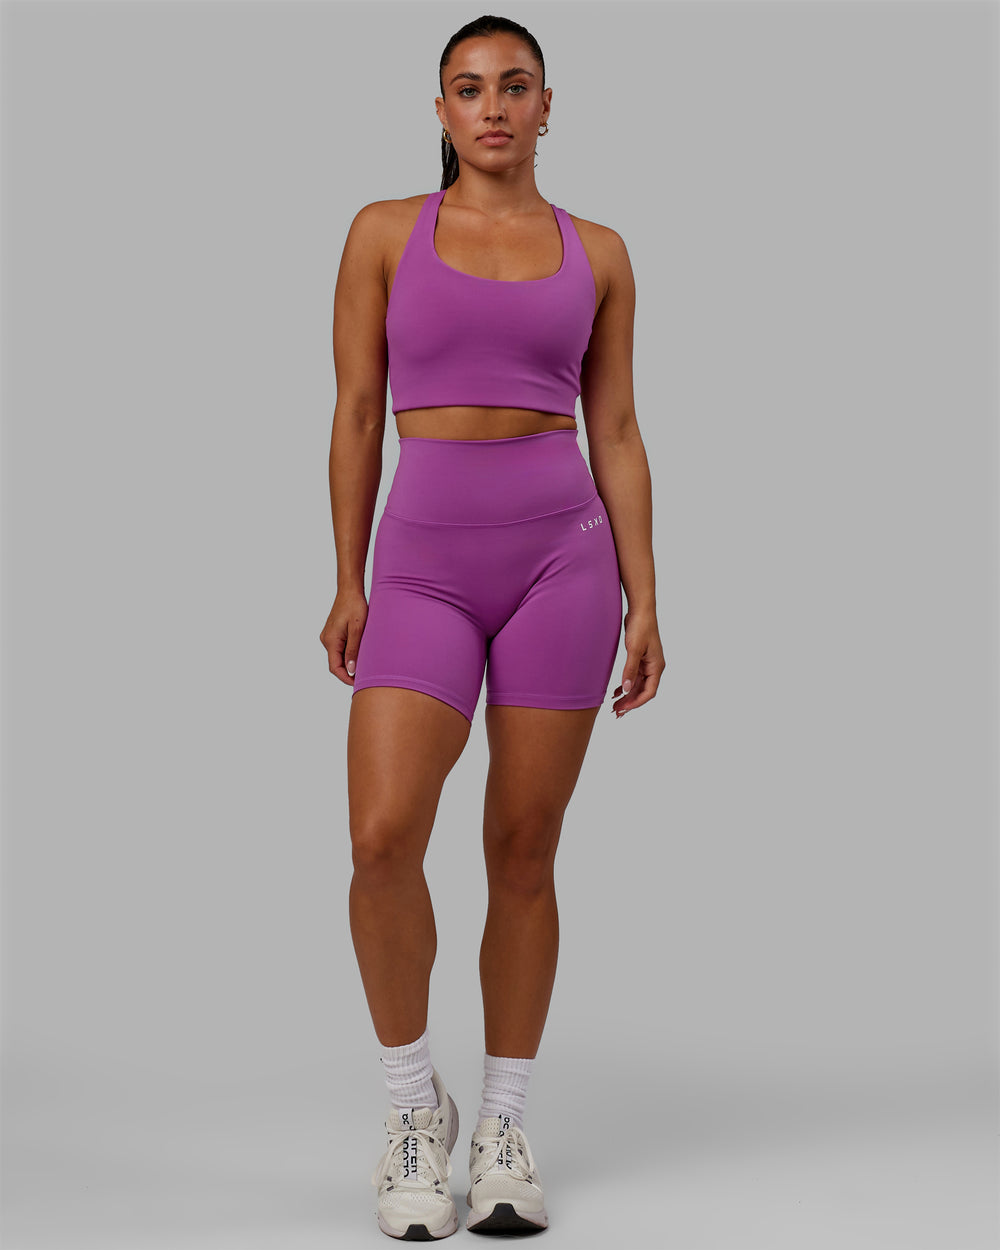 Woman wearing Base 2.0 Mid Short Tight - Hyper Violet